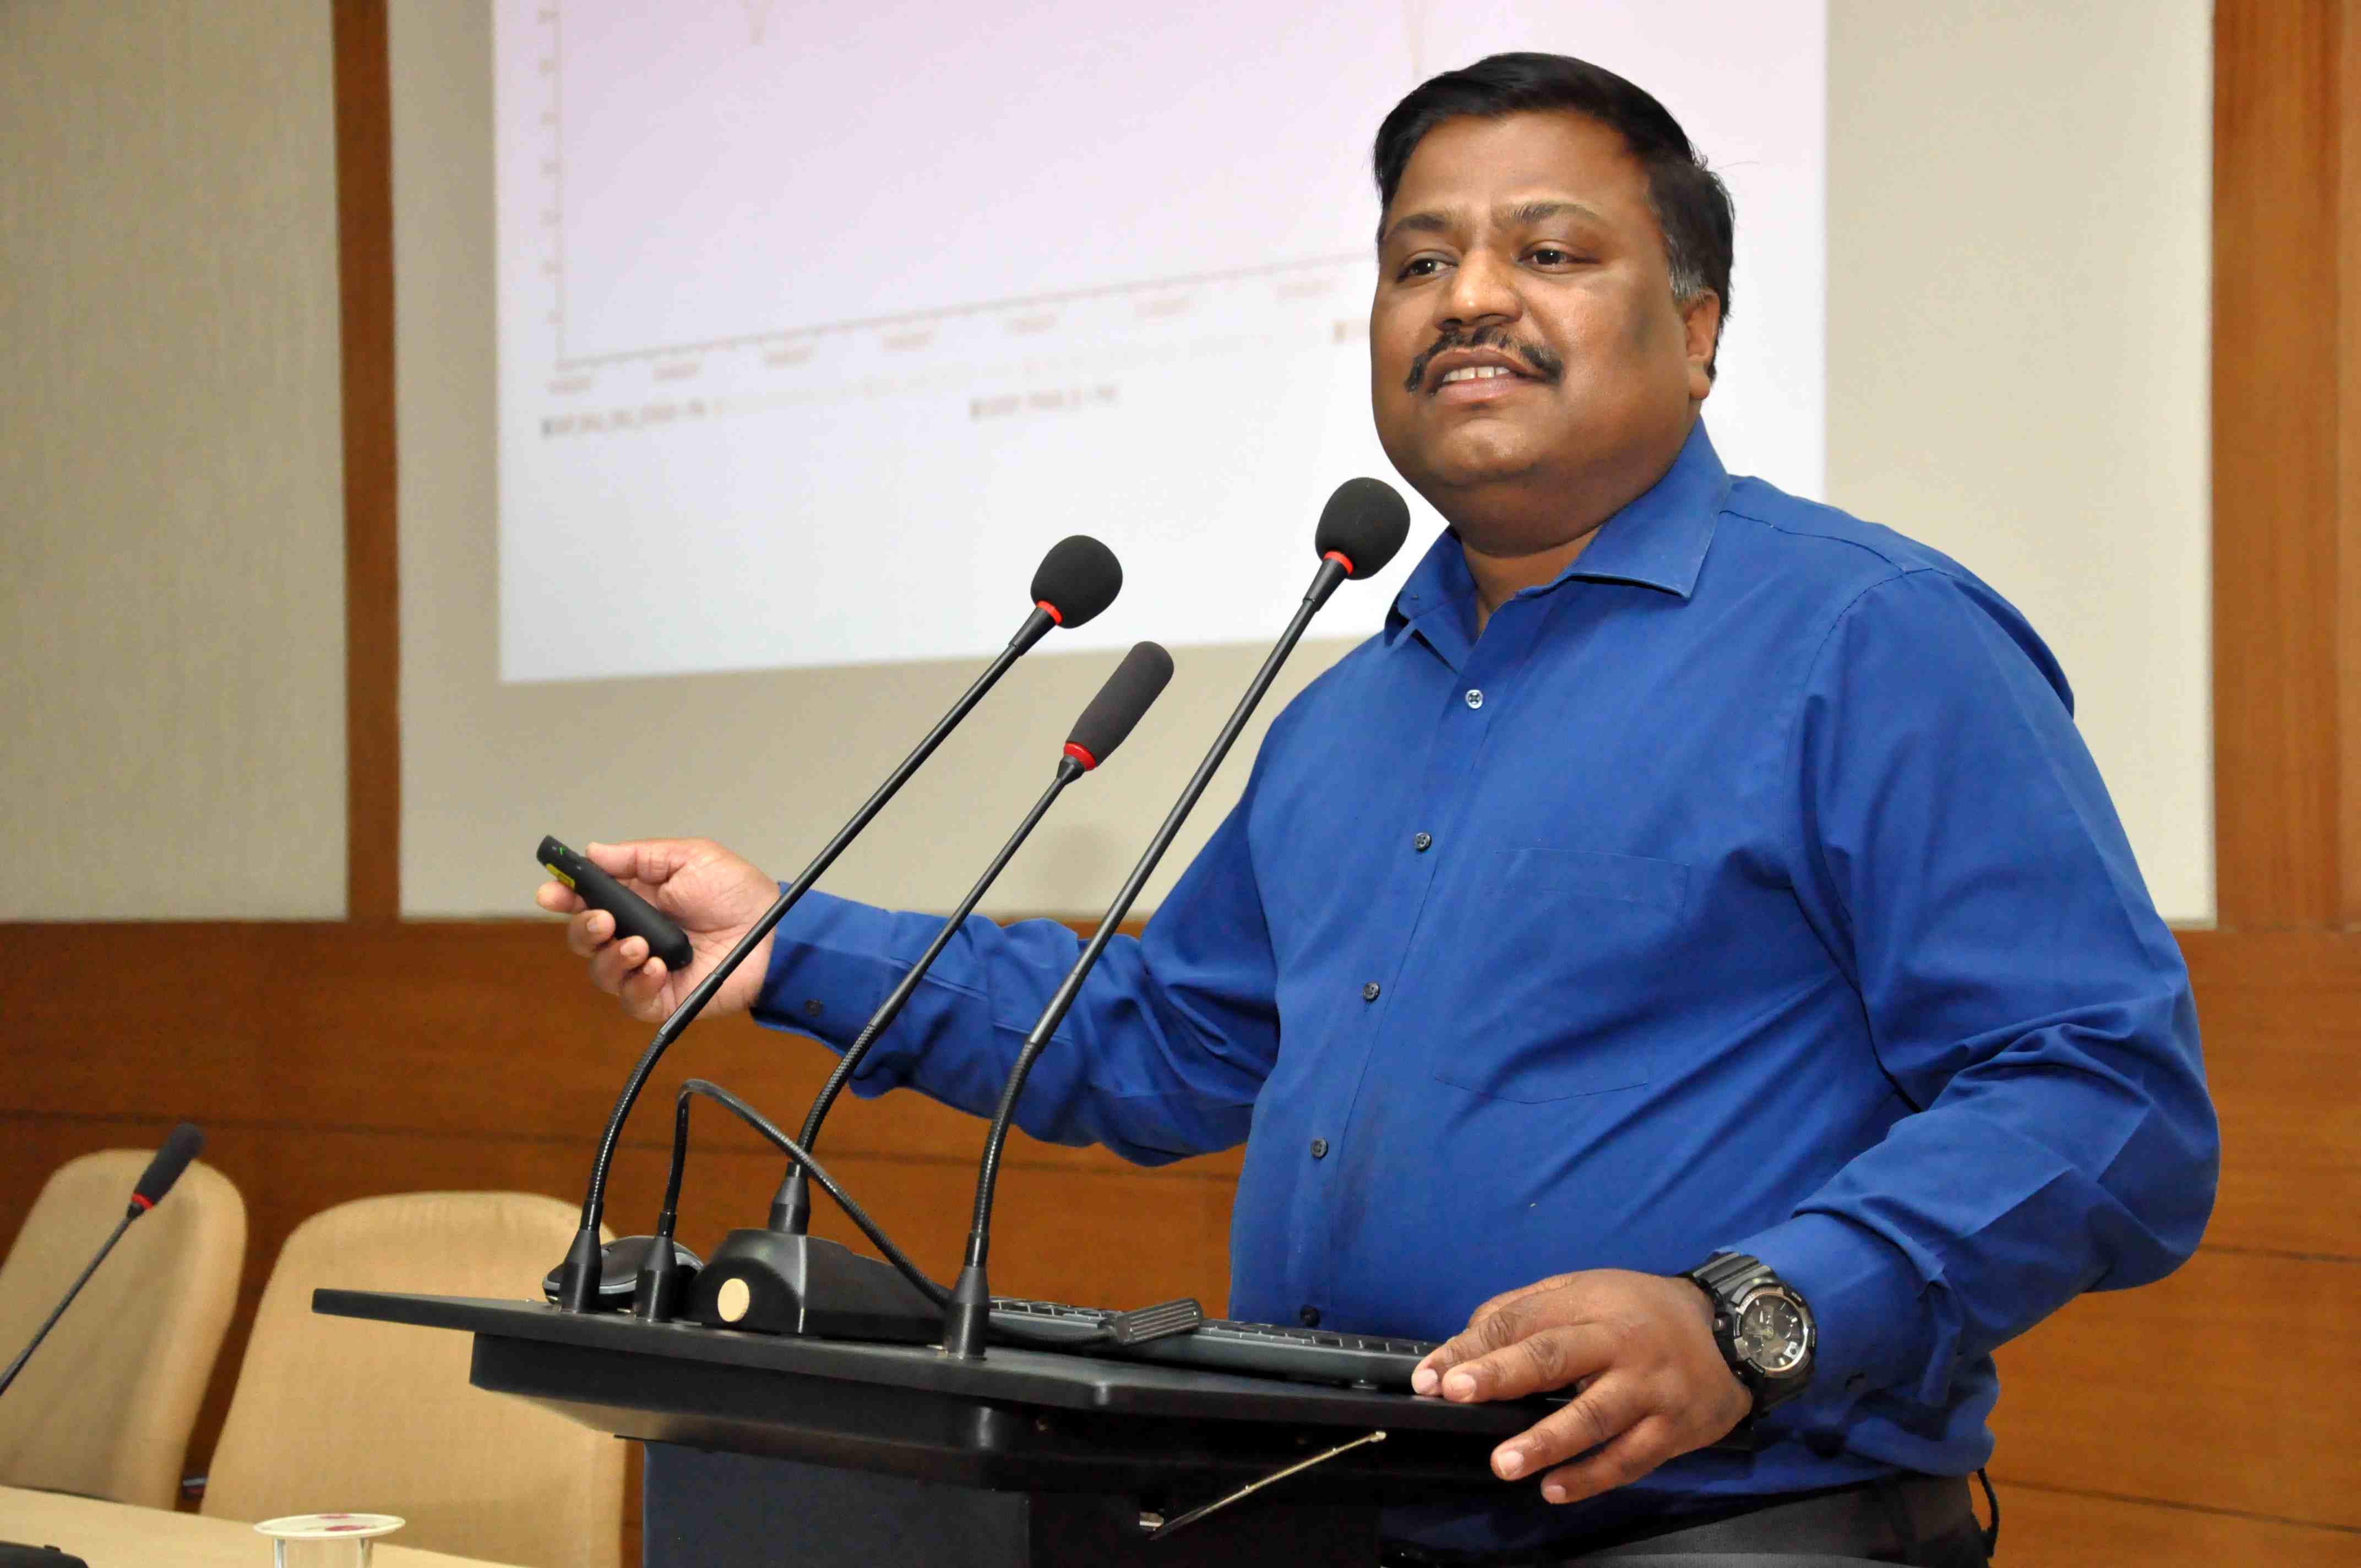 Shri Sudheesh Narayan, M/s GLens, Bangalore speaking on data tampering threats